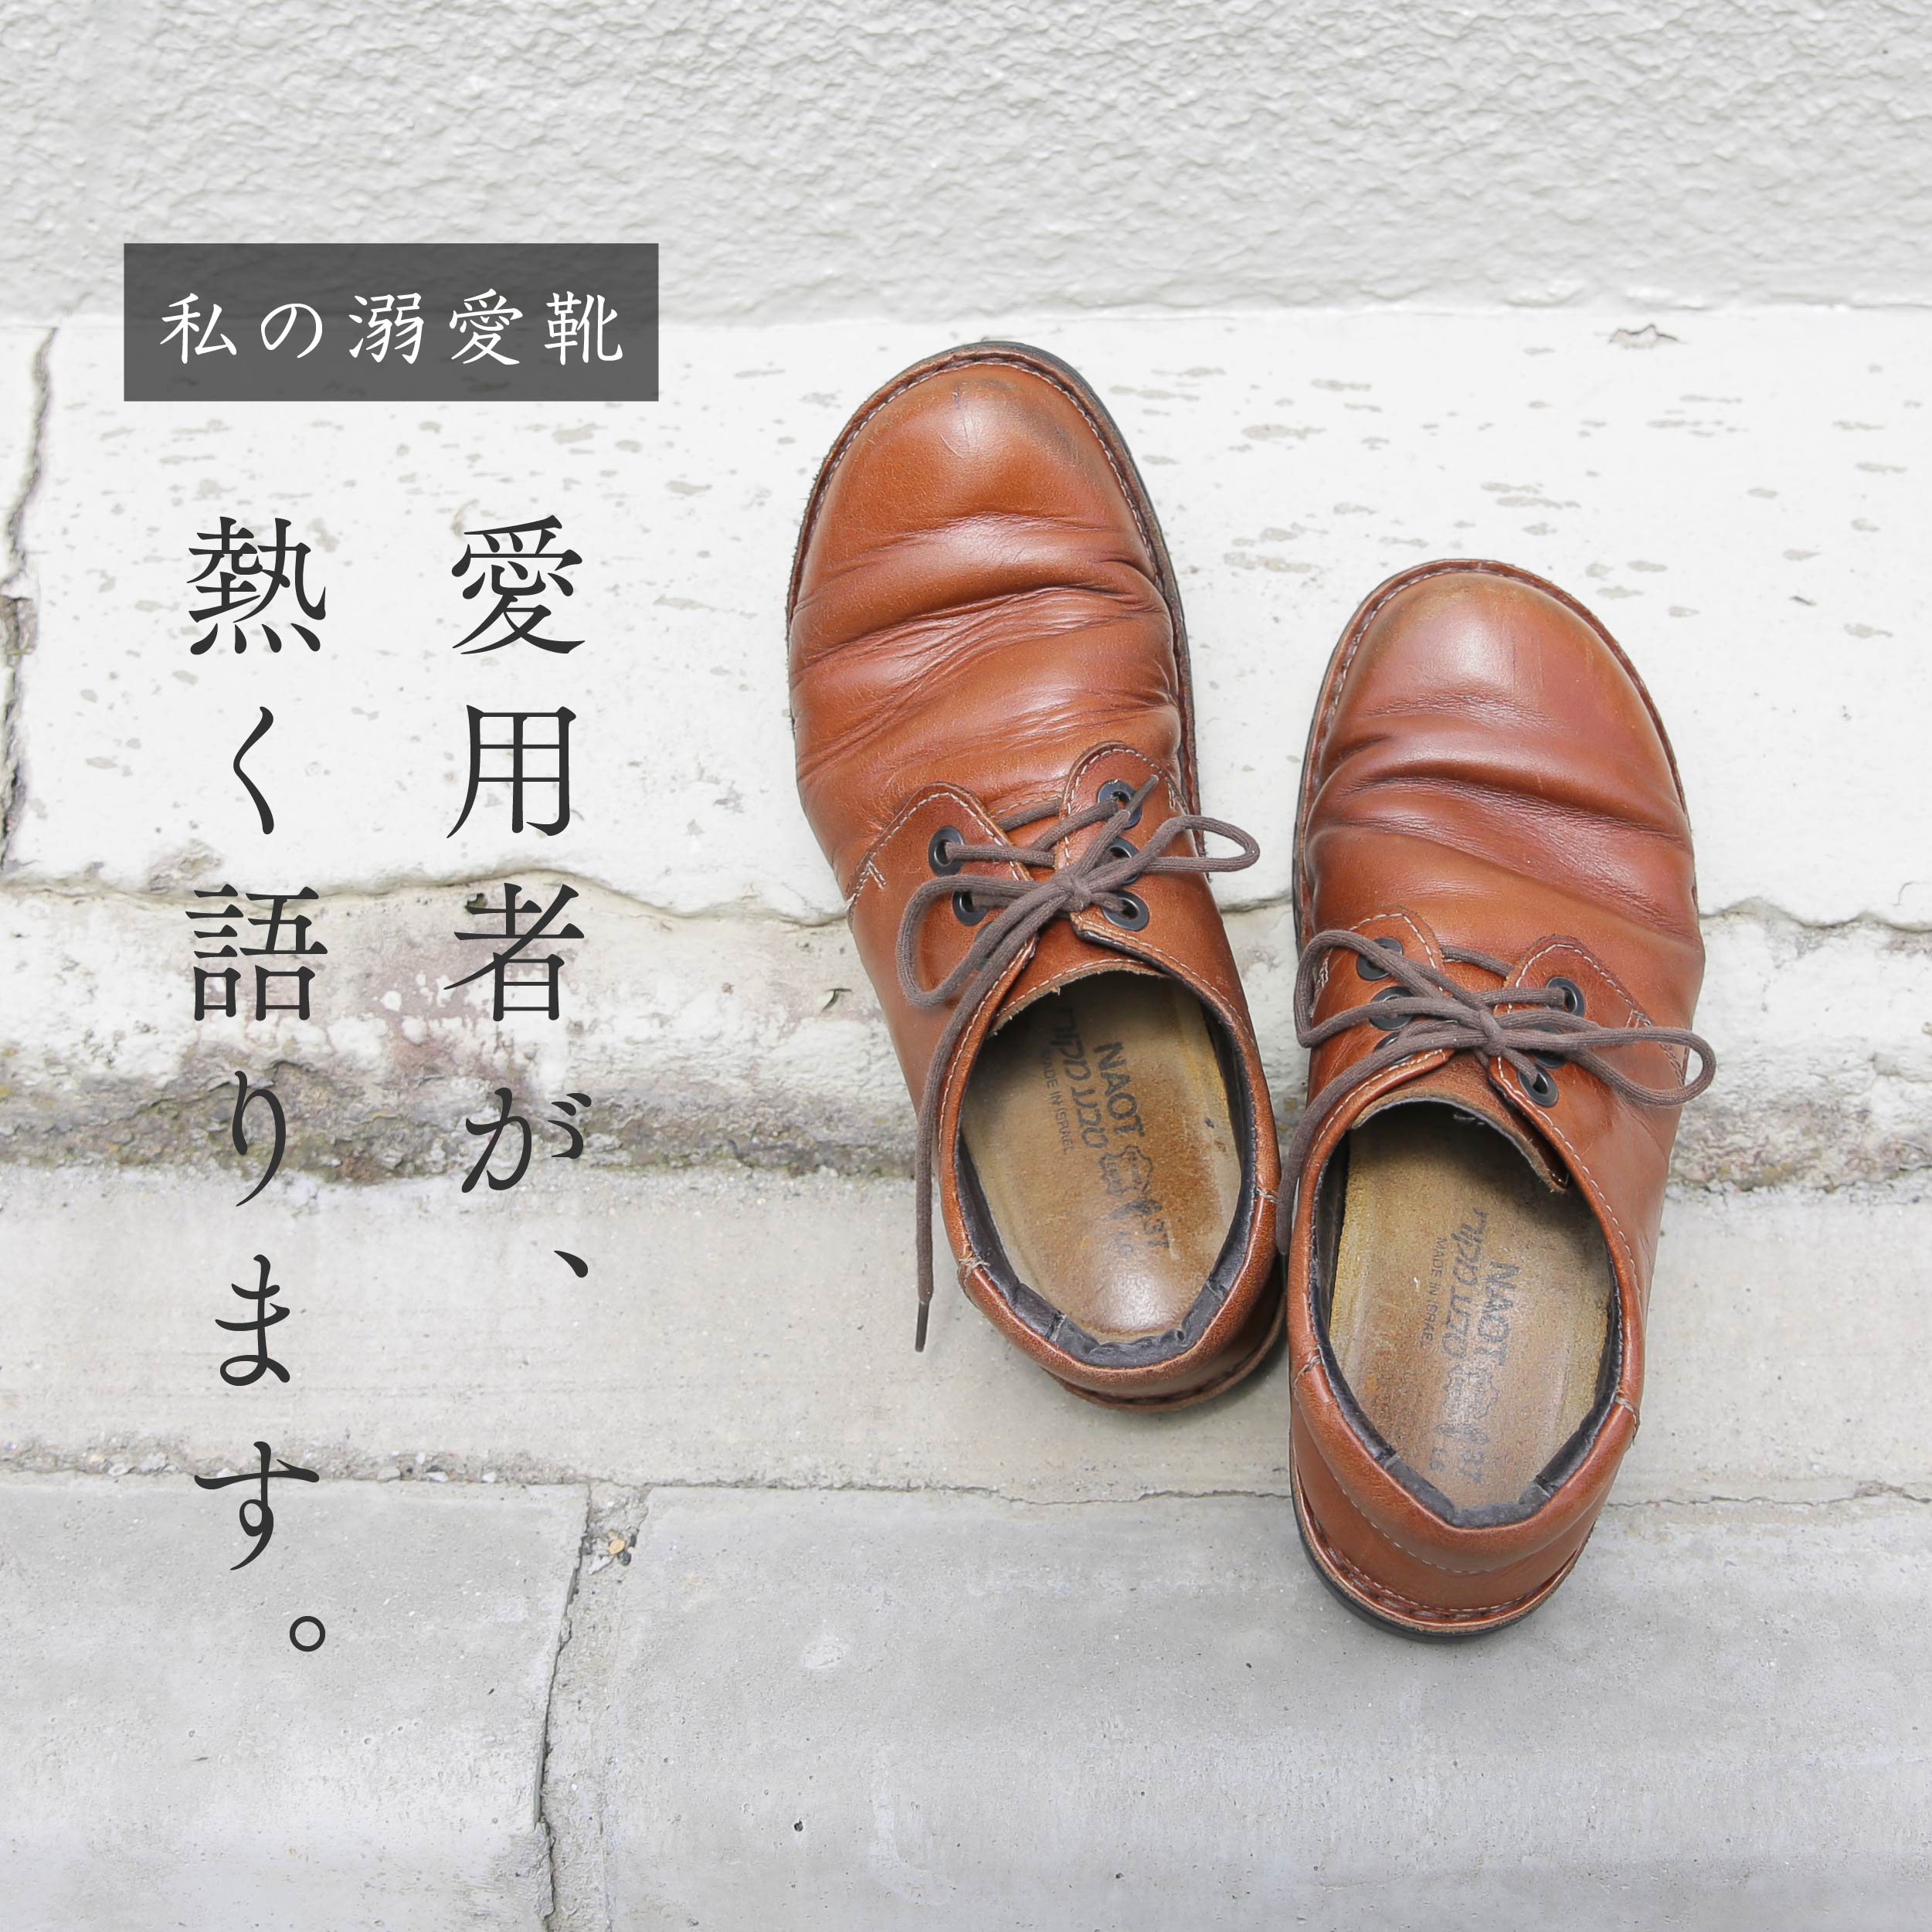 激安超安値 naot 革靴 daniela asakusa.sub.jp